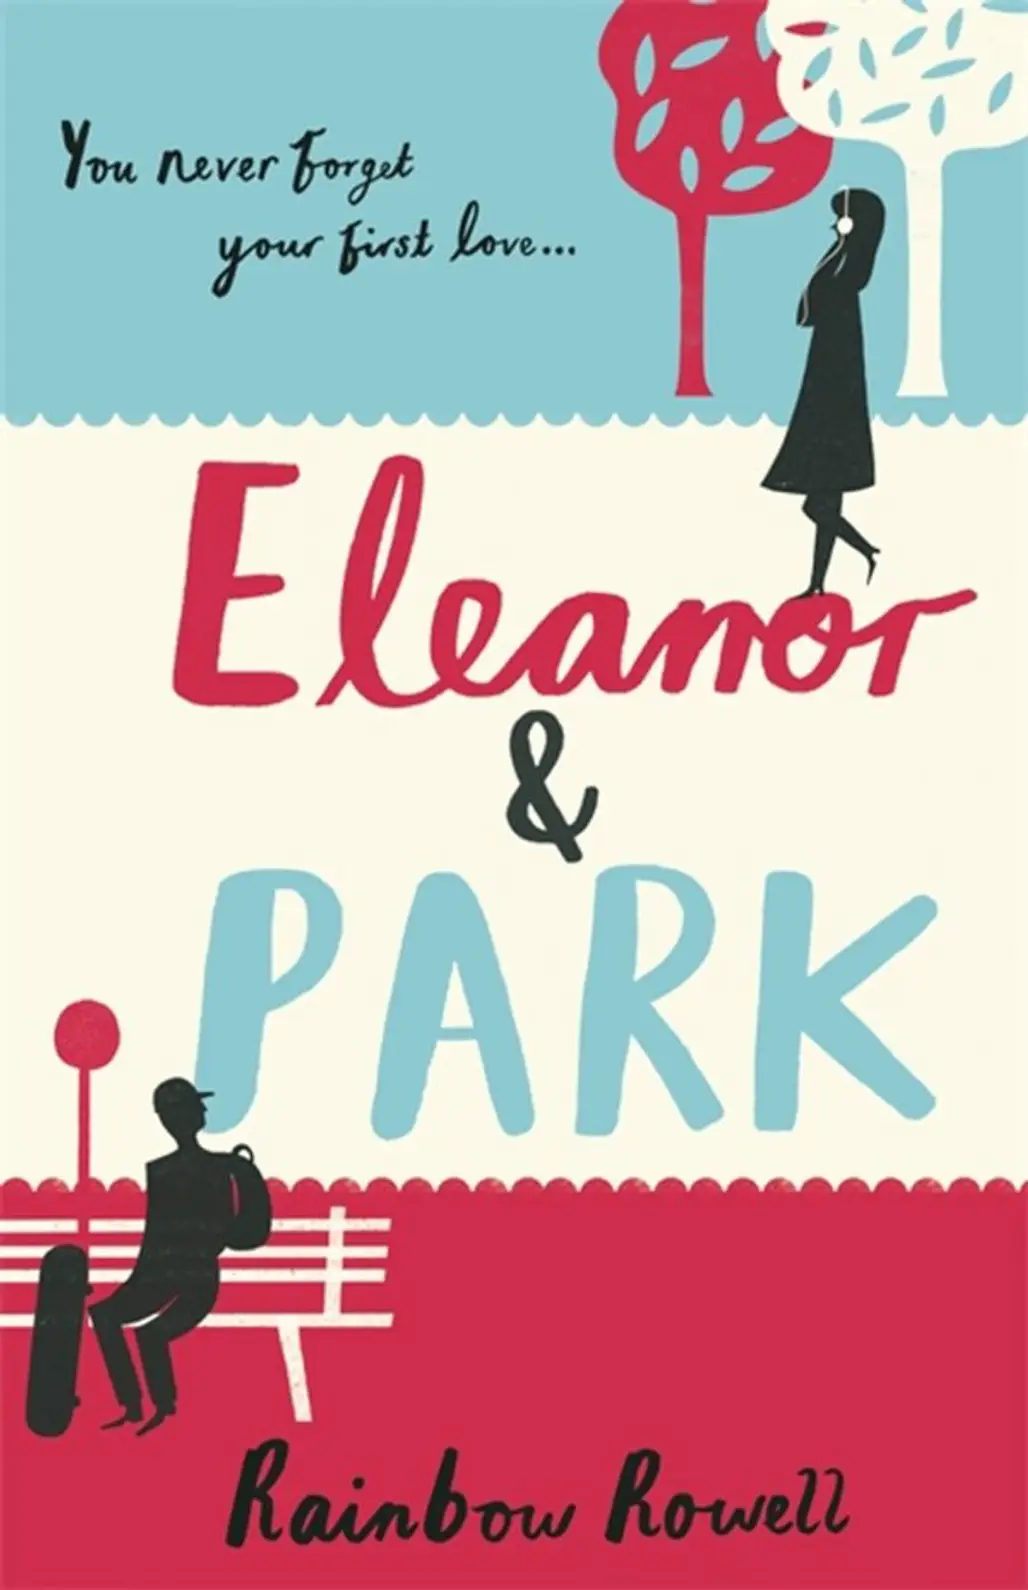 “Eleanor & Park”